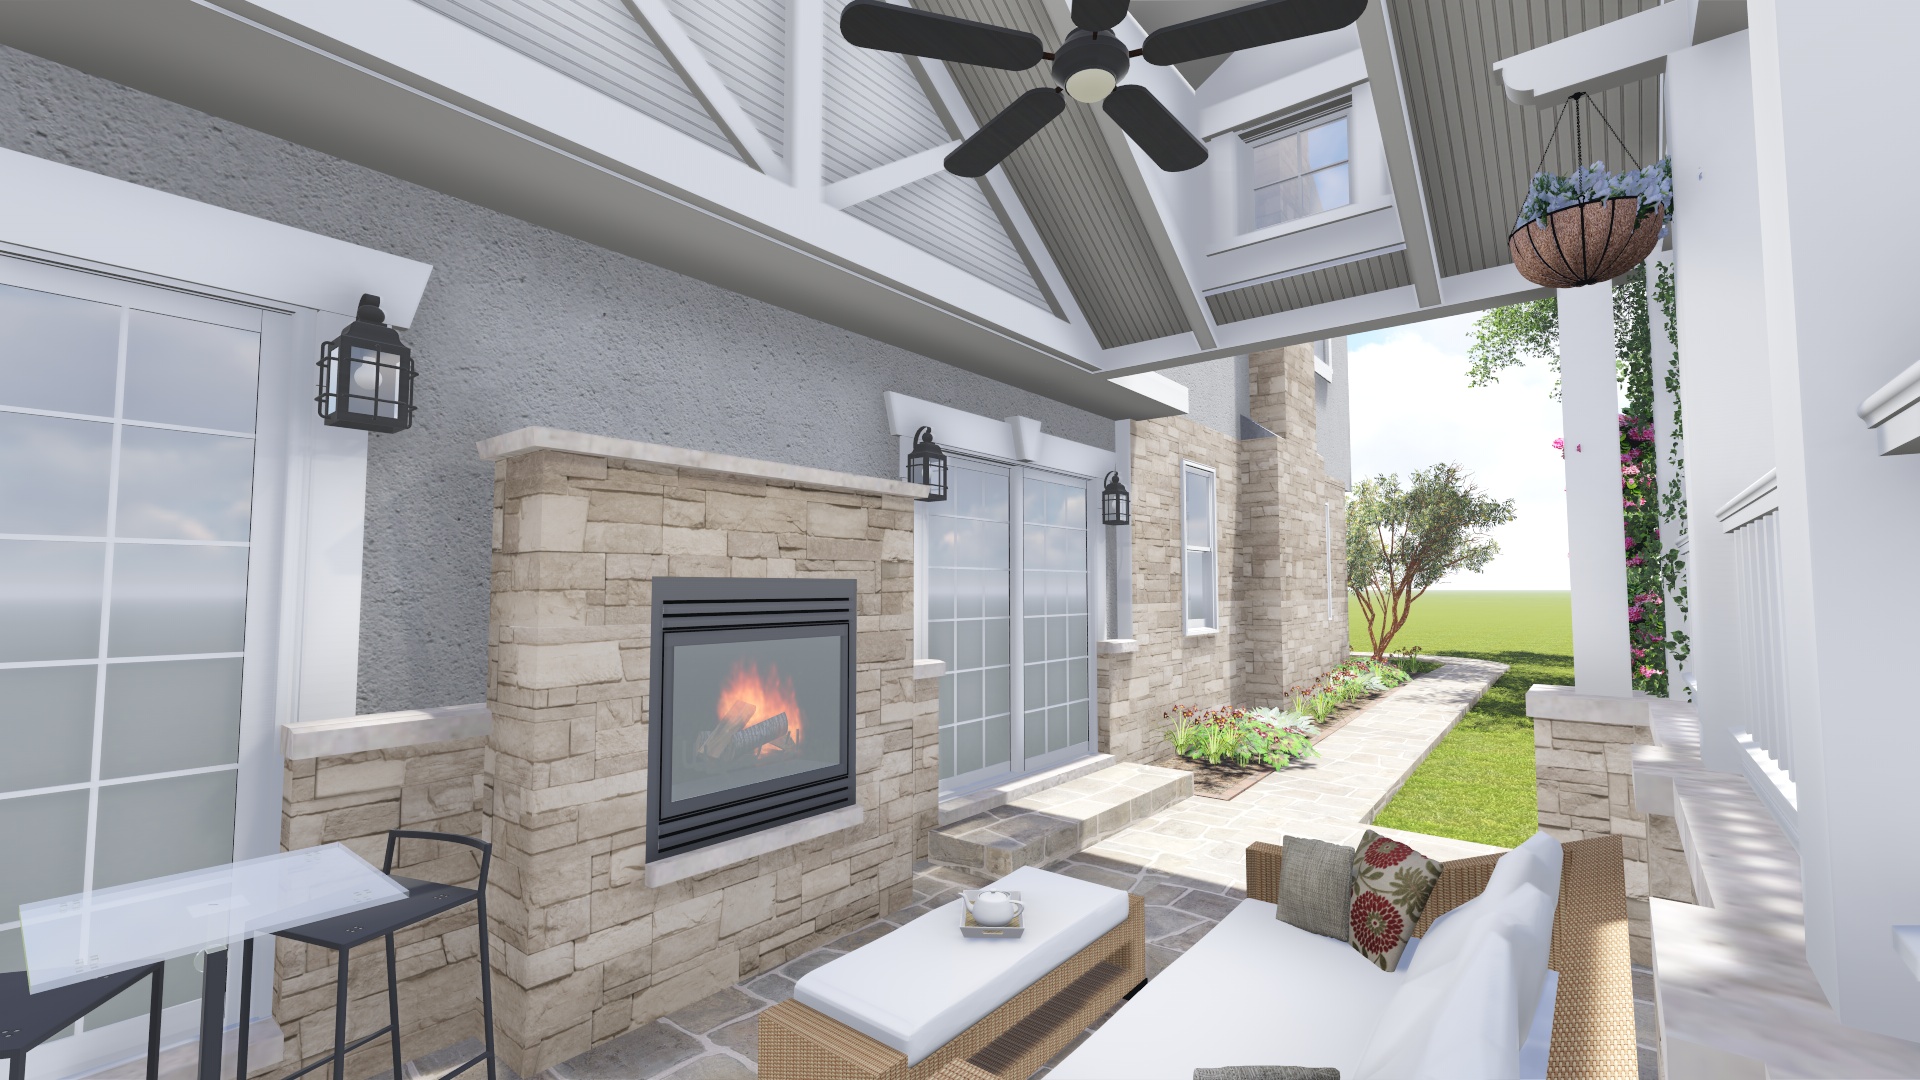 PROCESS: New side porch proposal